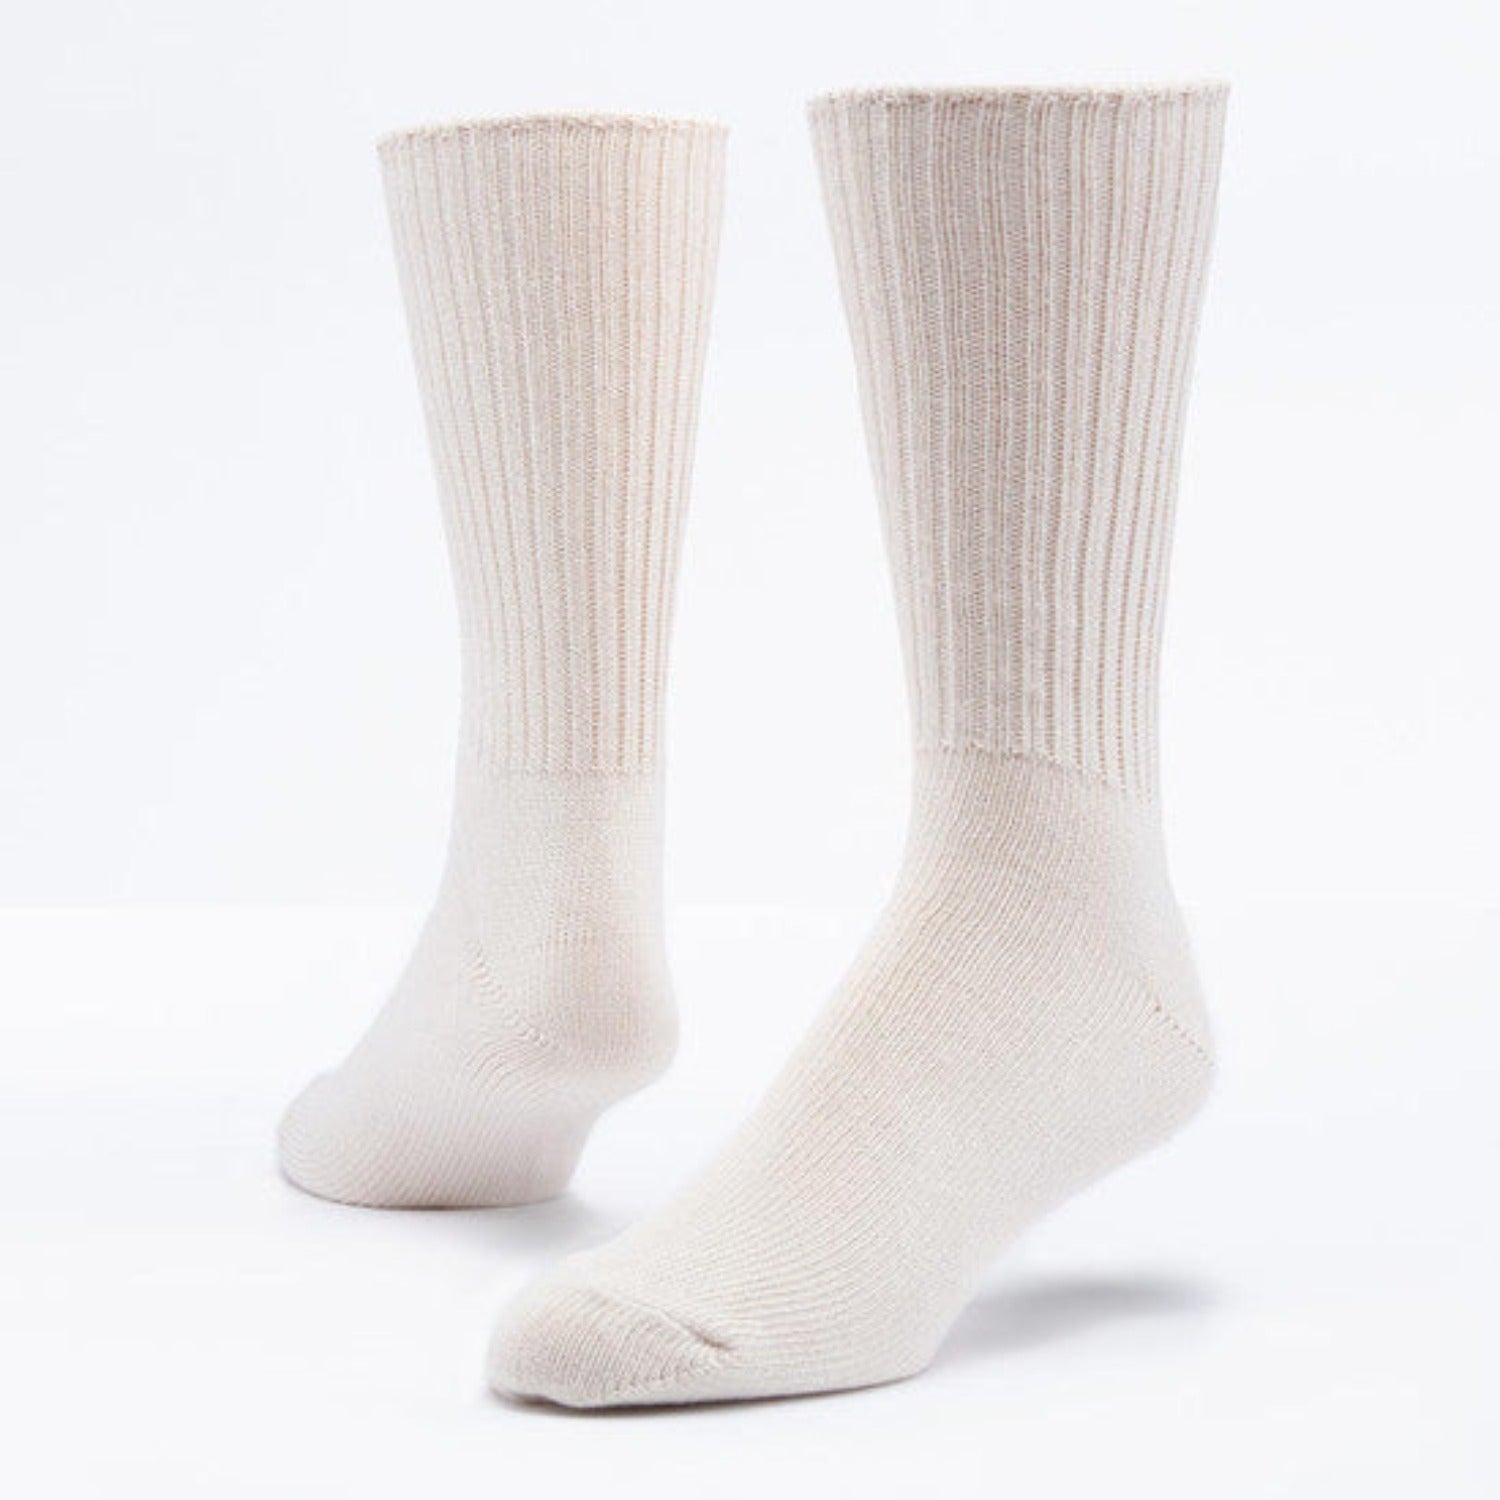 Organic Cotton Socks - Compression